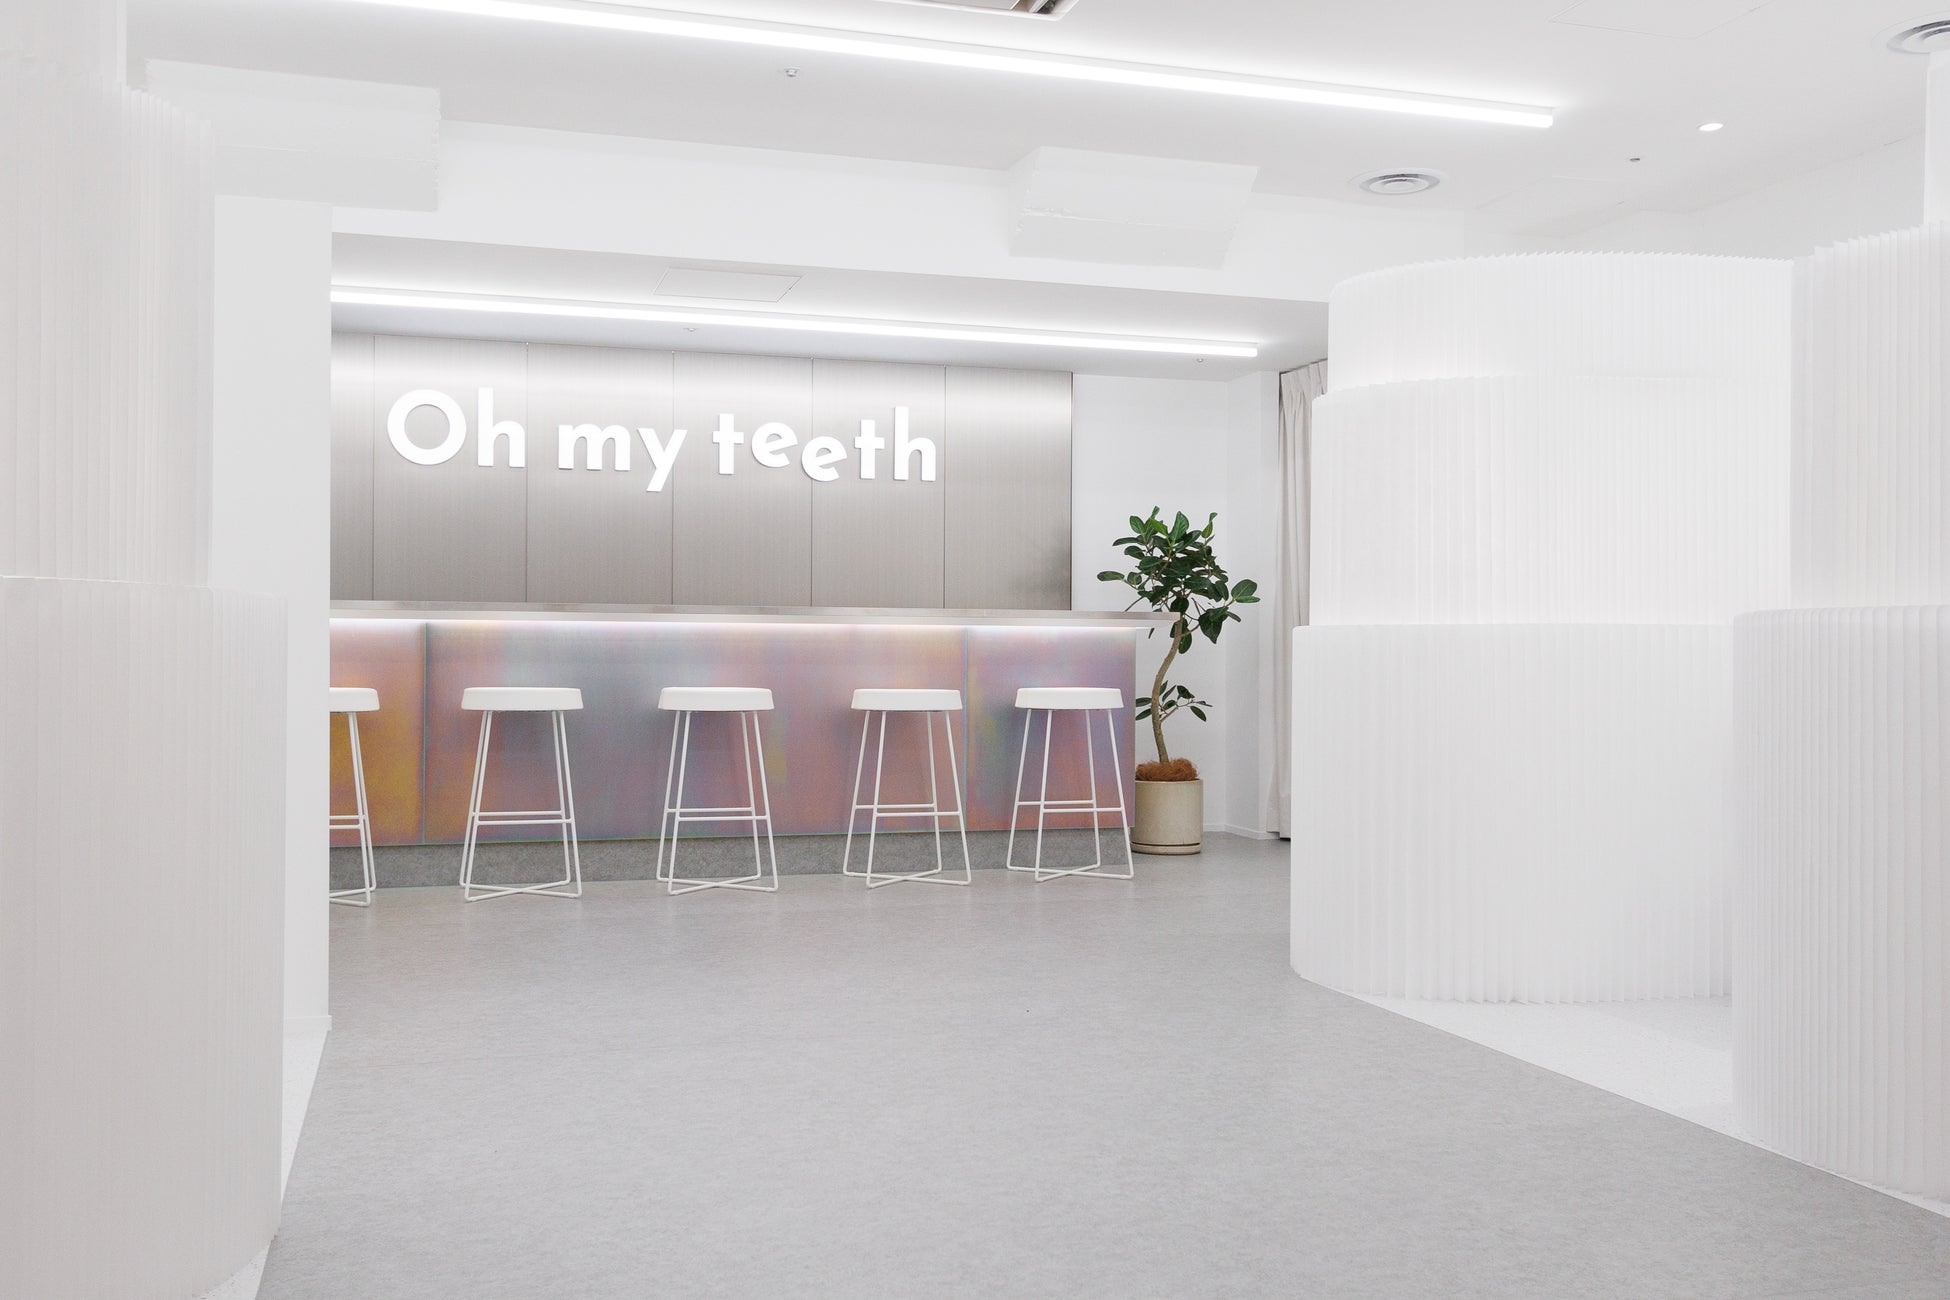 Oh my teethは、革命的な歯科プロダクトで「未来の歯科体験」を生み出します！